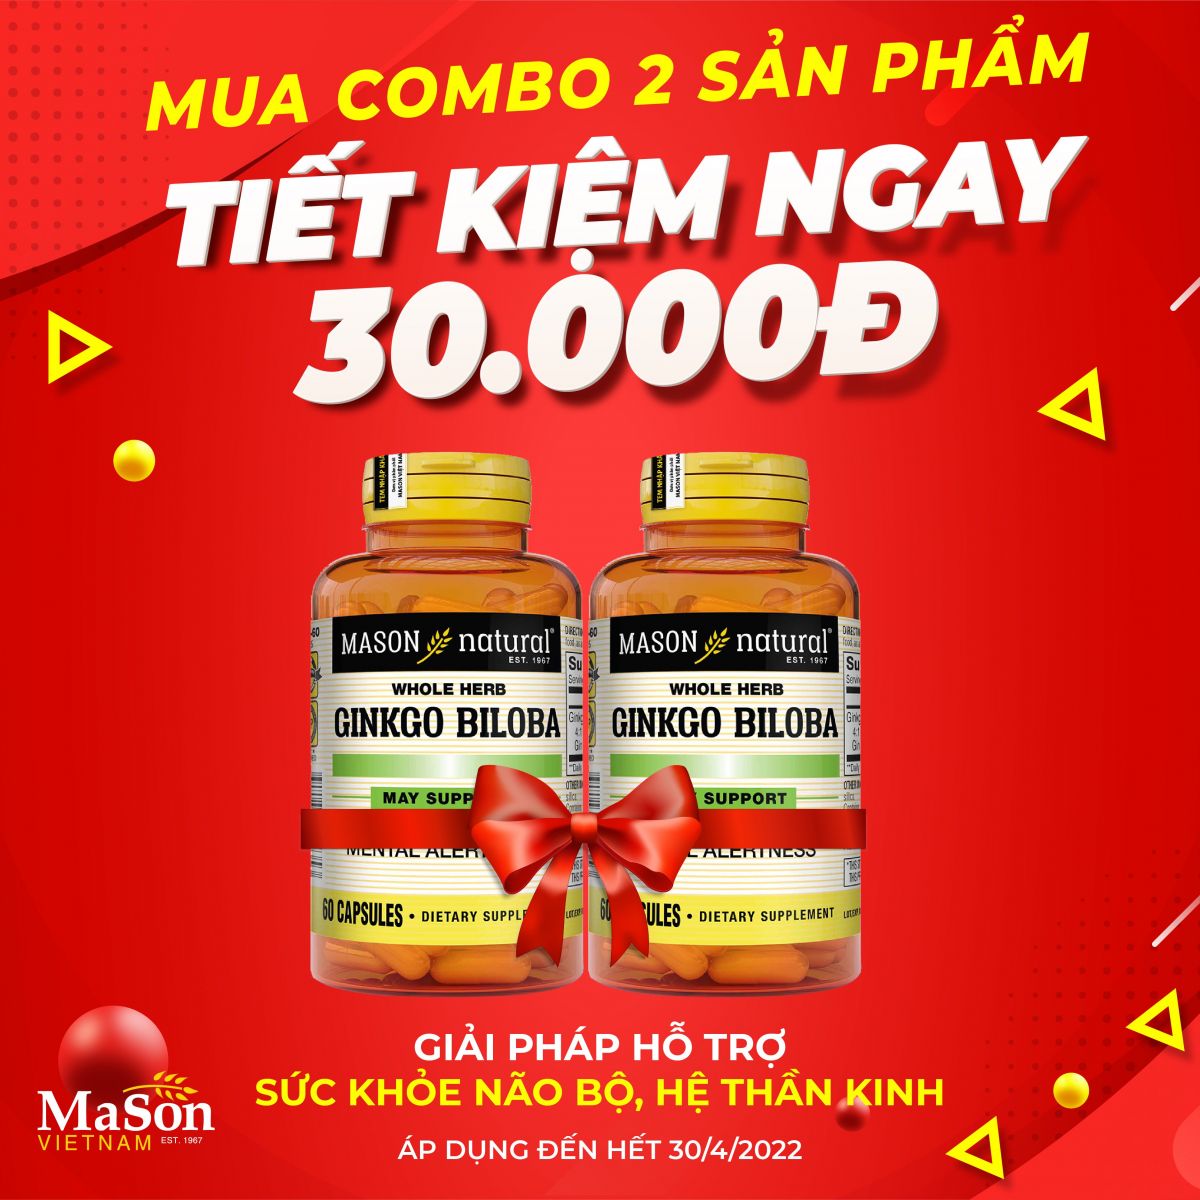 Giảm ngay 30K khi mua Combo 2 sản phẩm Ginkgo Biloba hoặc Combo 2 sản phẩm Milk Thistle của Mason Natural